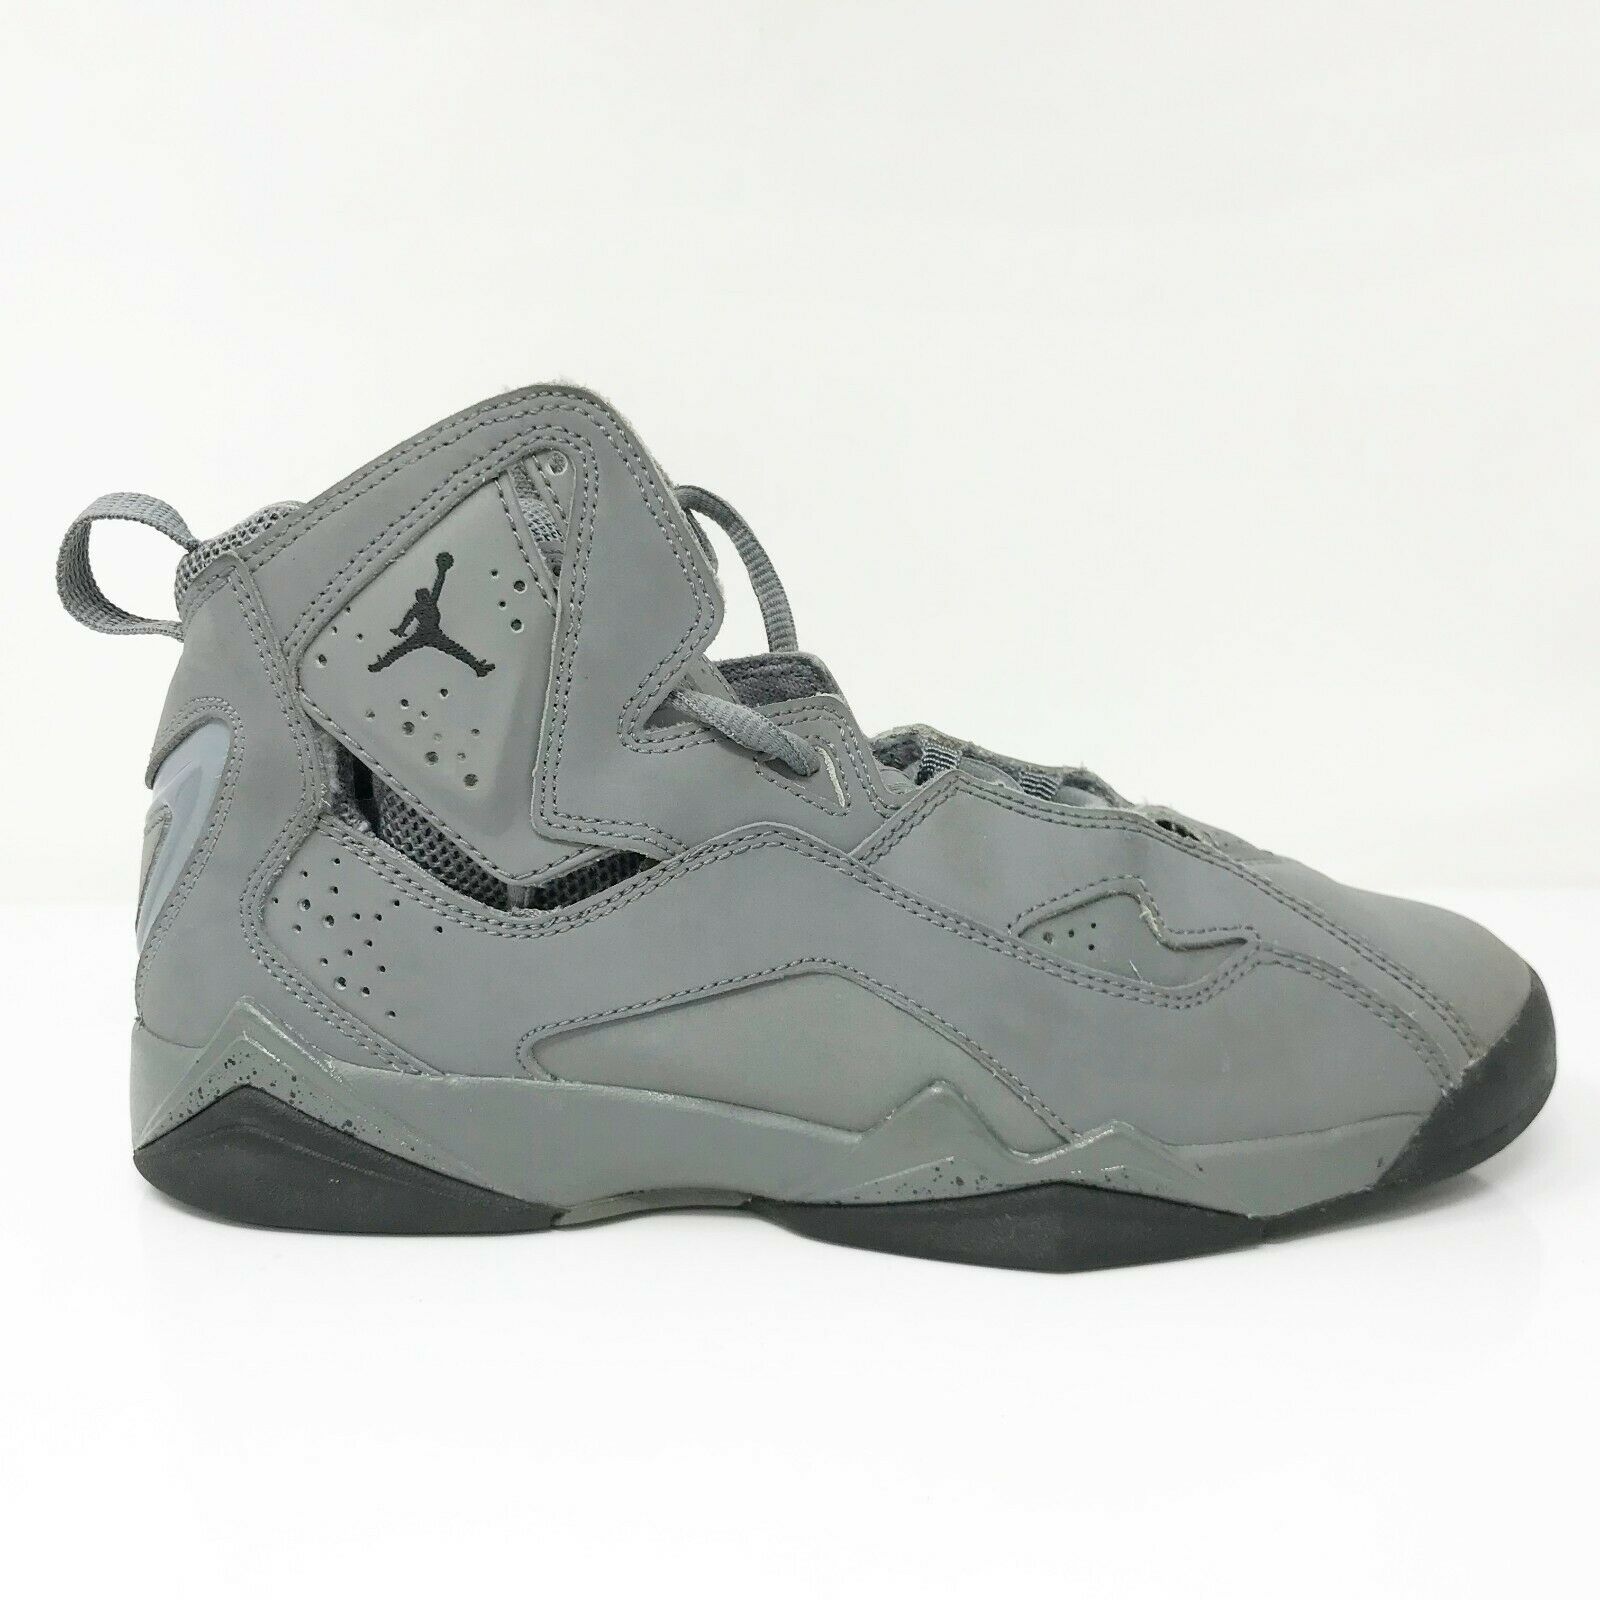 Nike Boys Air Jordan True Flight 343795-027 Gray Basketball Shoes Lace Up Sz 6Y